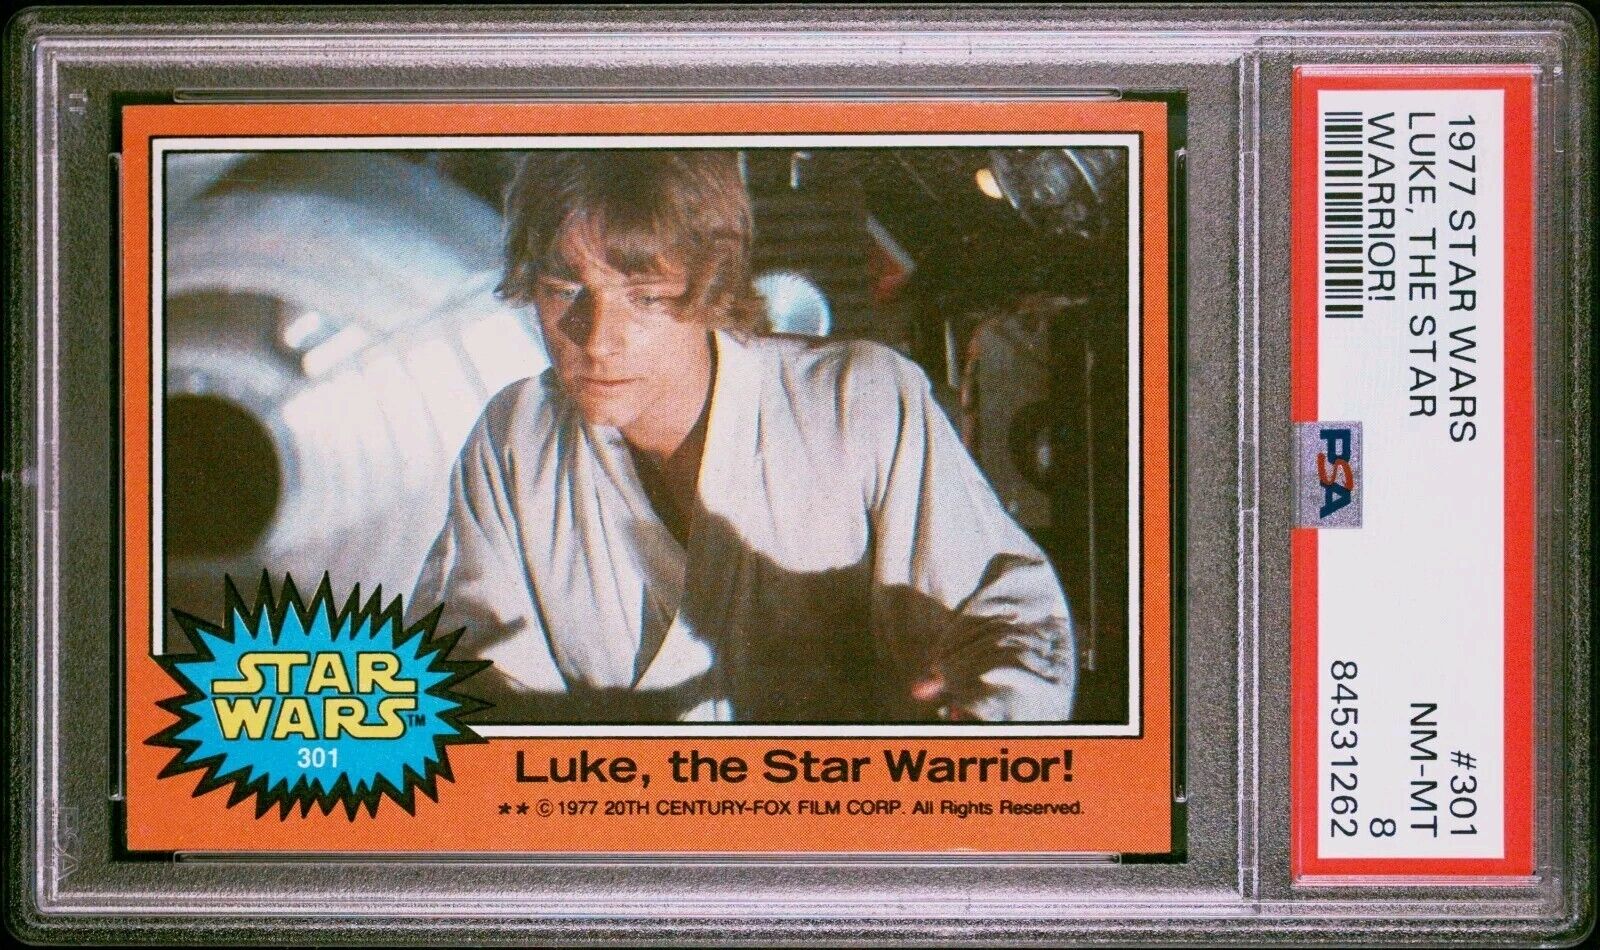 1977 Topps Star Wars #301 LUKE THE STAR WARRIOR - PSA 8 NM-MT - Series 5 Orange